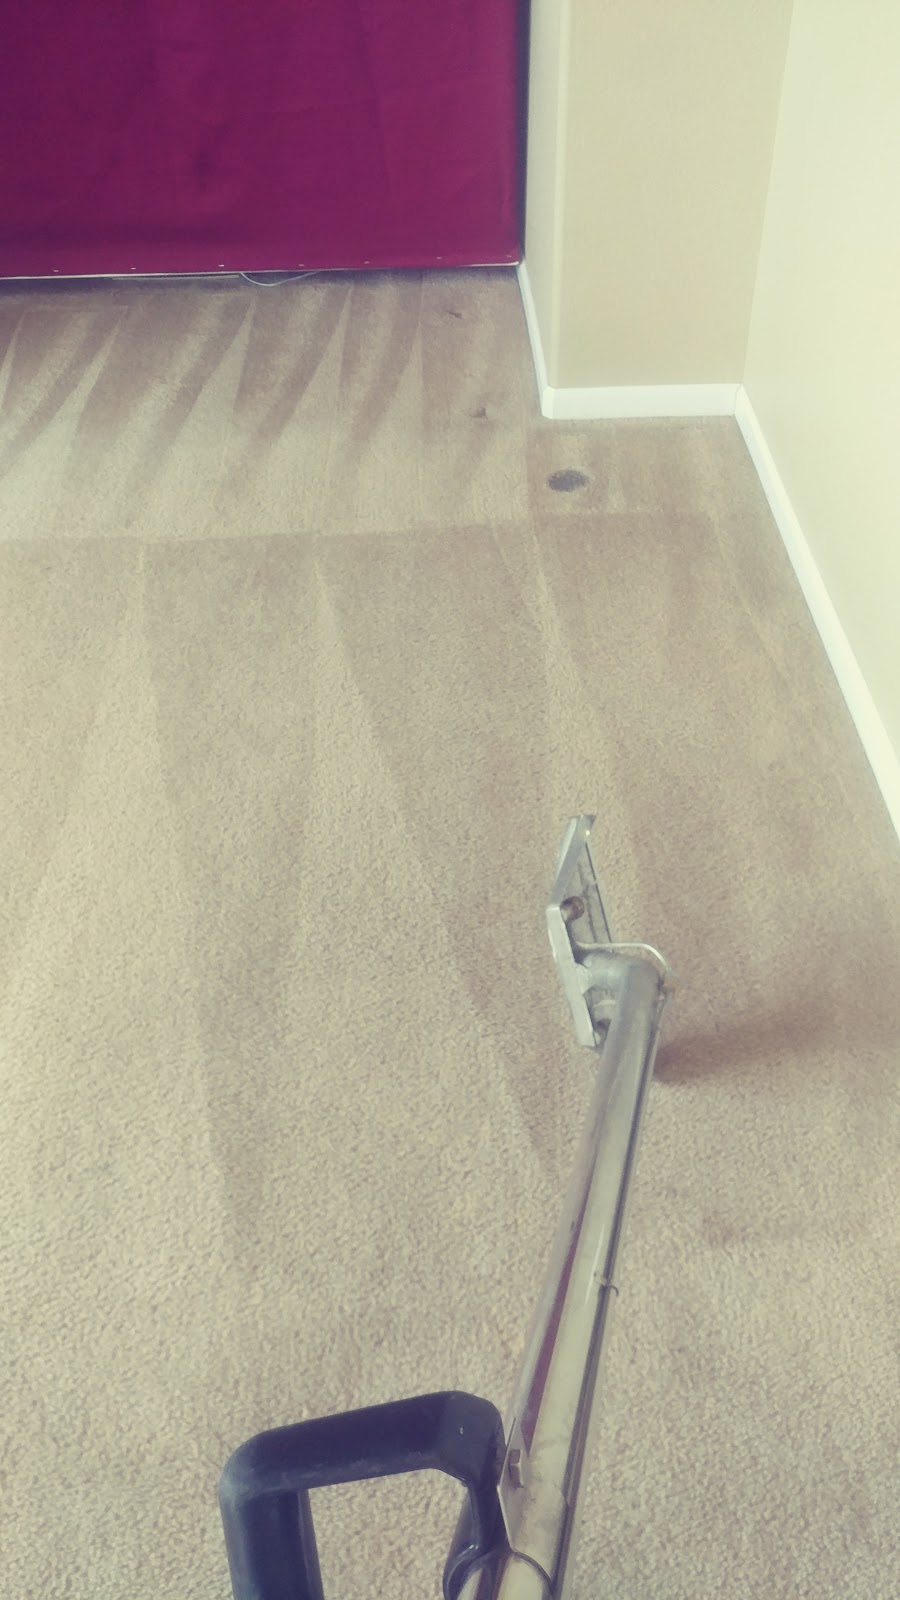 Scrubbing away carpet cleaning